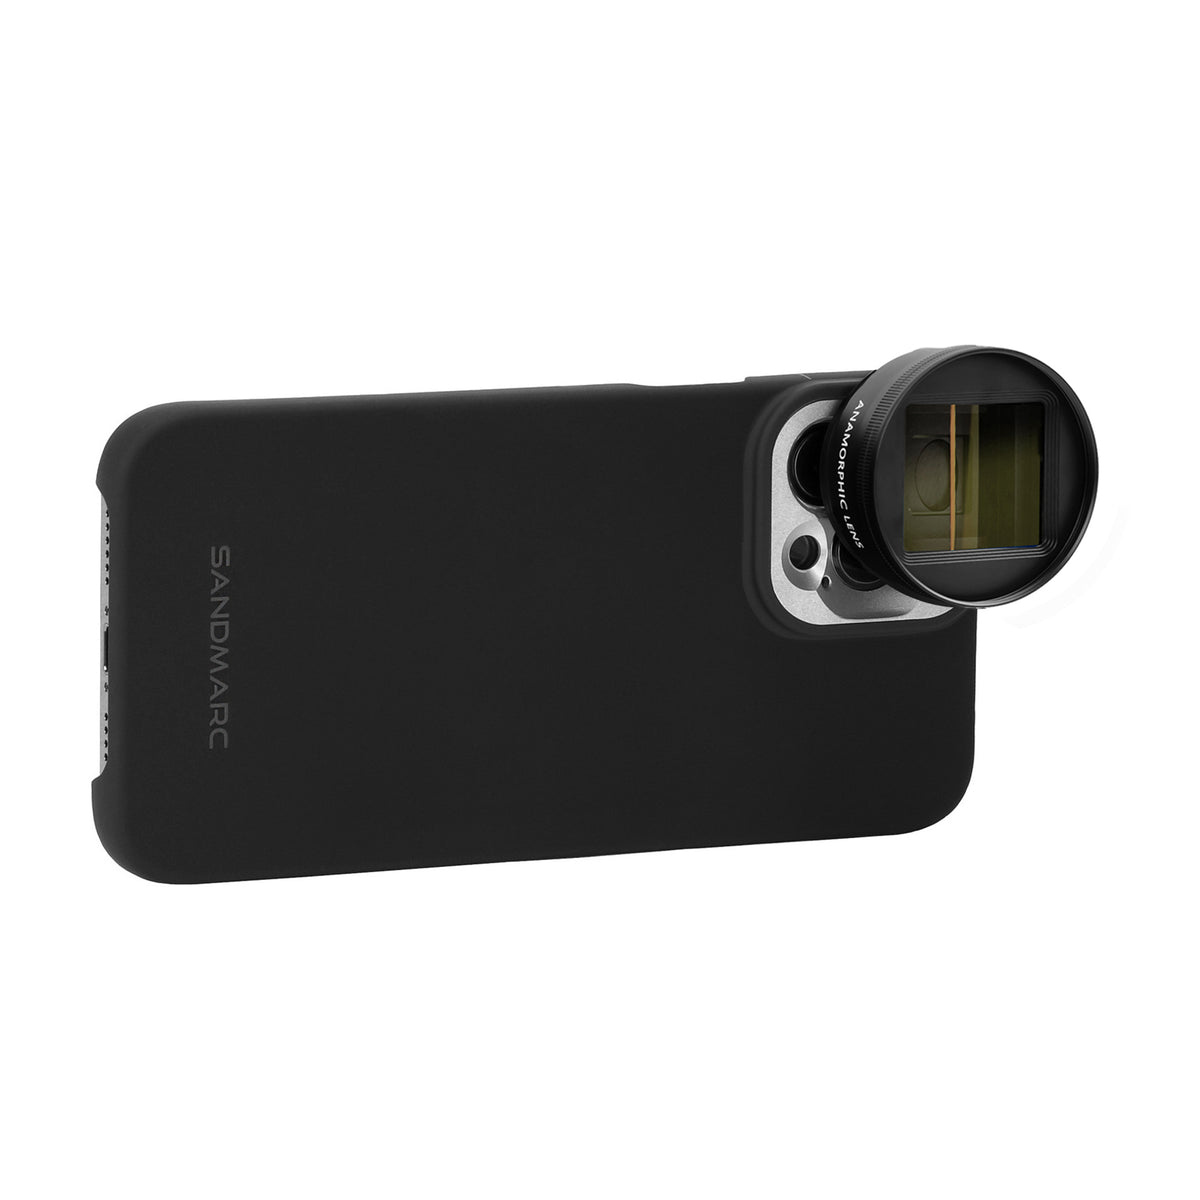 Anamorphic Lens Edition - iPhone 11 Pro Max - SANDMARC #type_anamorphic 1.33x